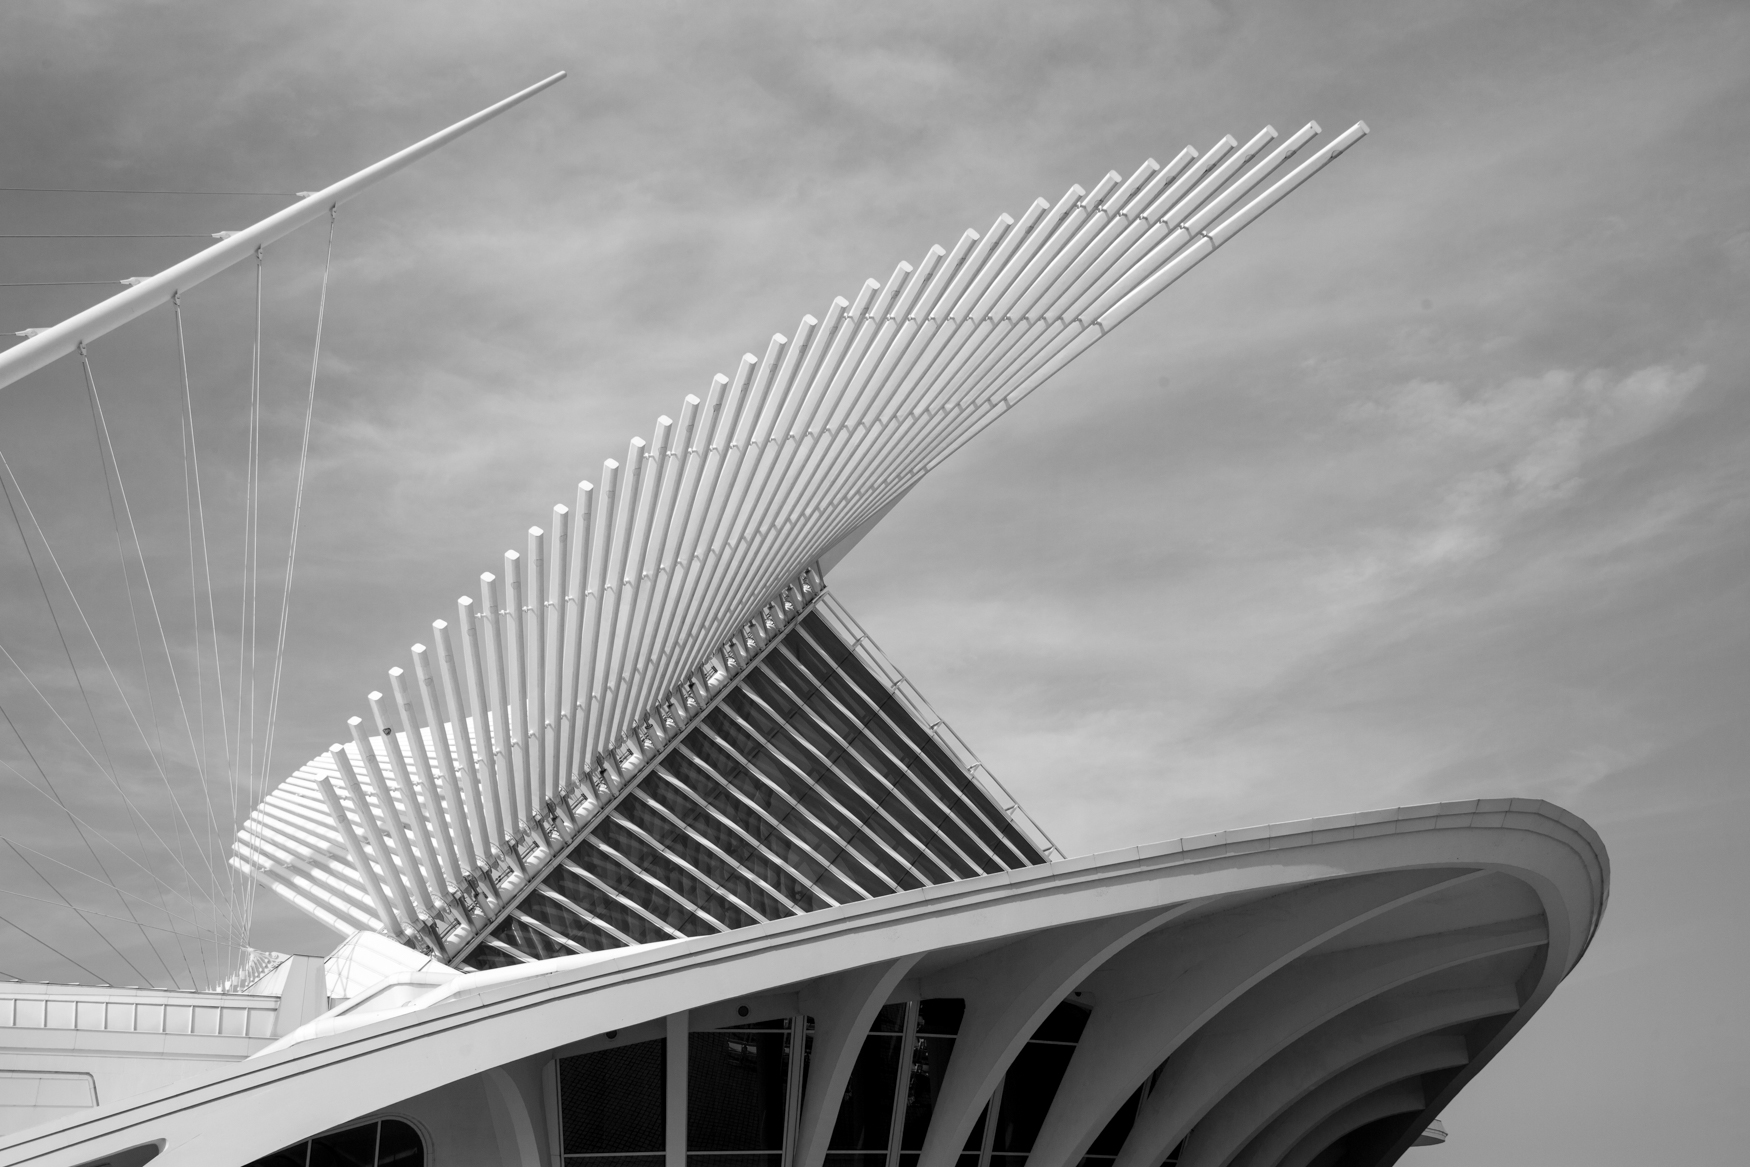 BURKE BRISE SOLEIL, MILWAUKEE ART MUSEUM Santiago Calatrava